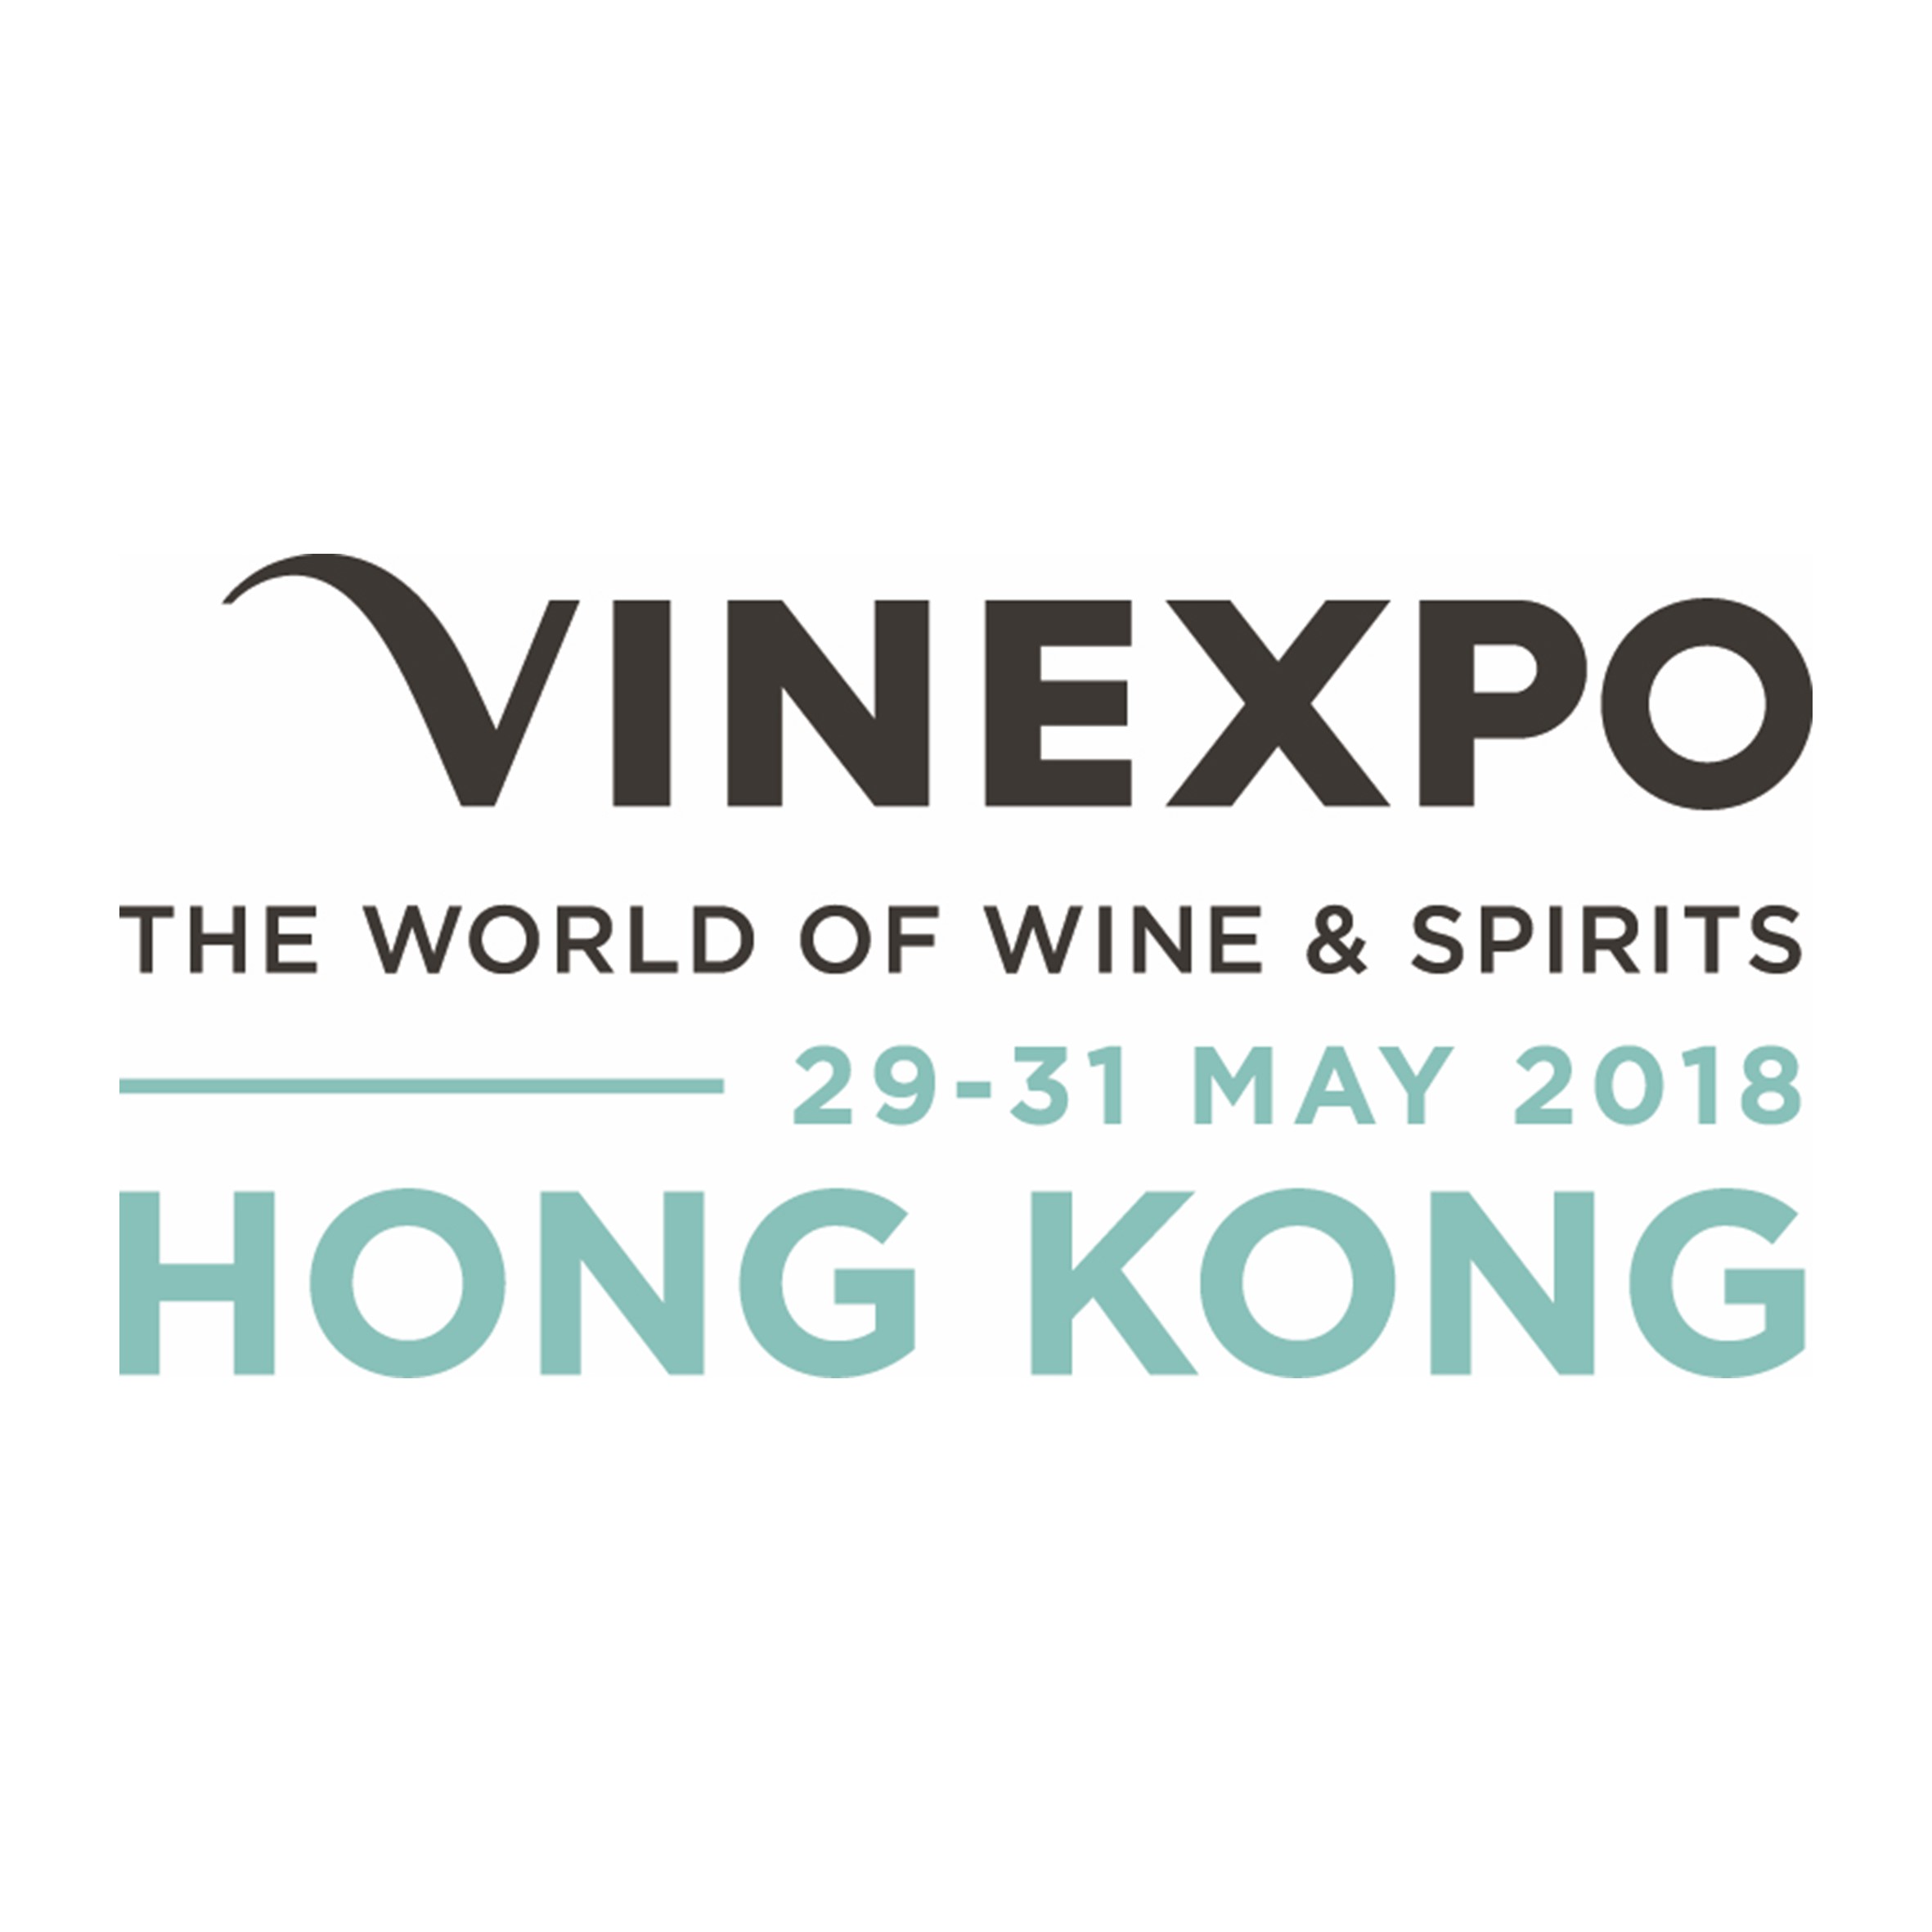 Vinexpo Hong Kong Logo 2018 - Global Trends in Wine 2020 Video Series